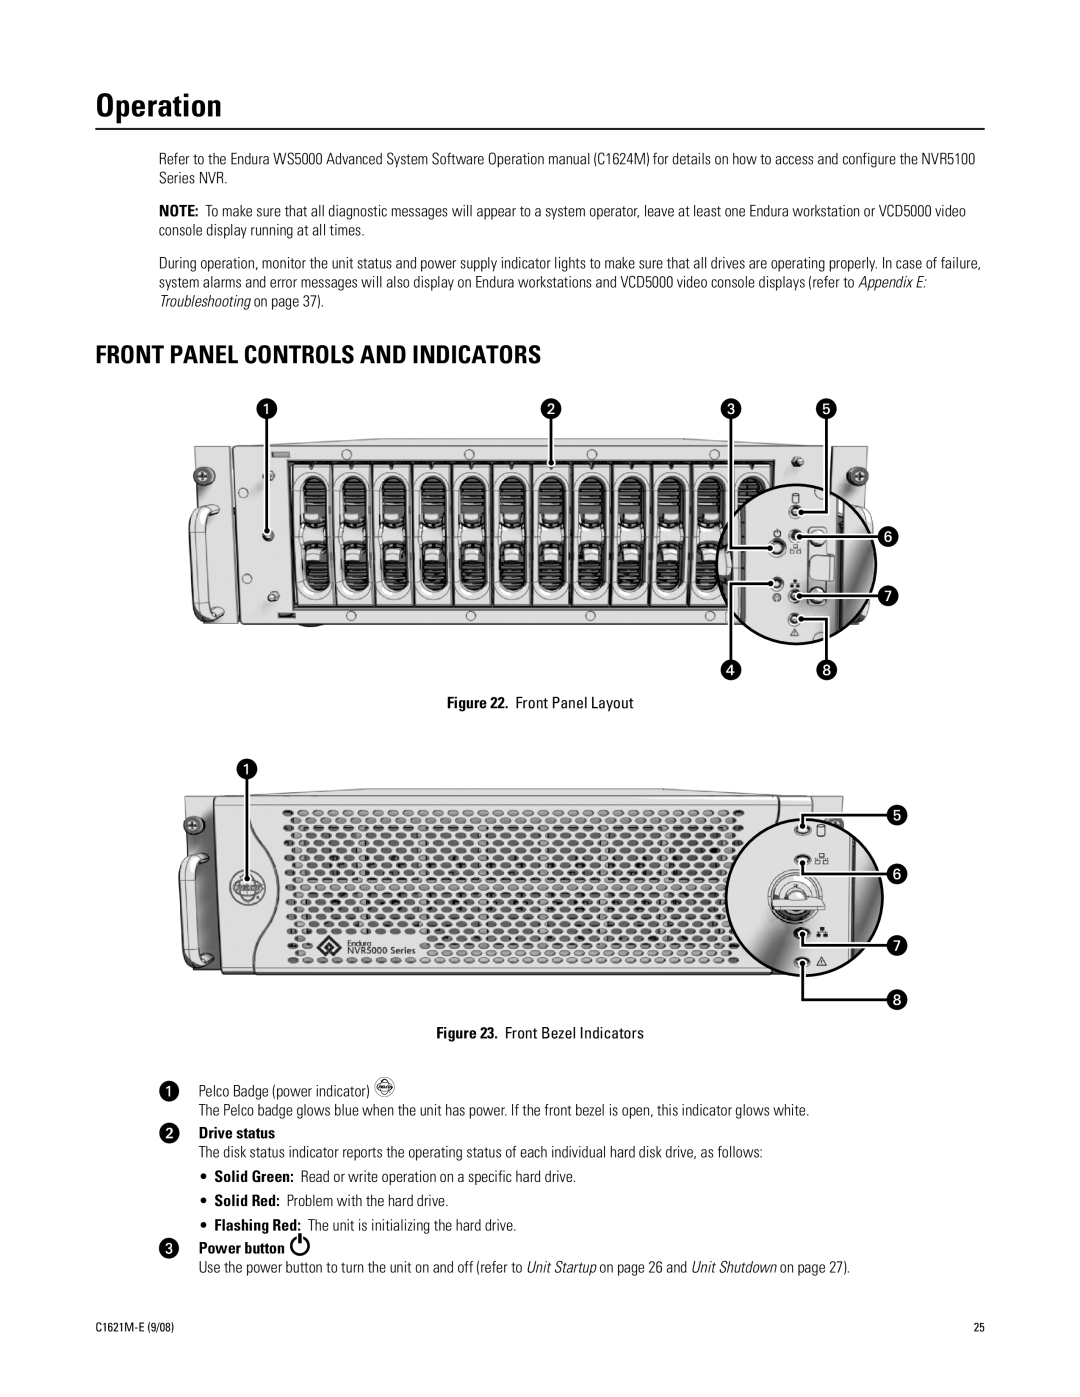 Pelco C1621M-E (9/08) 3 manual Operation, Front Panel Controls And Indicators, îDrive status, ïPower button 